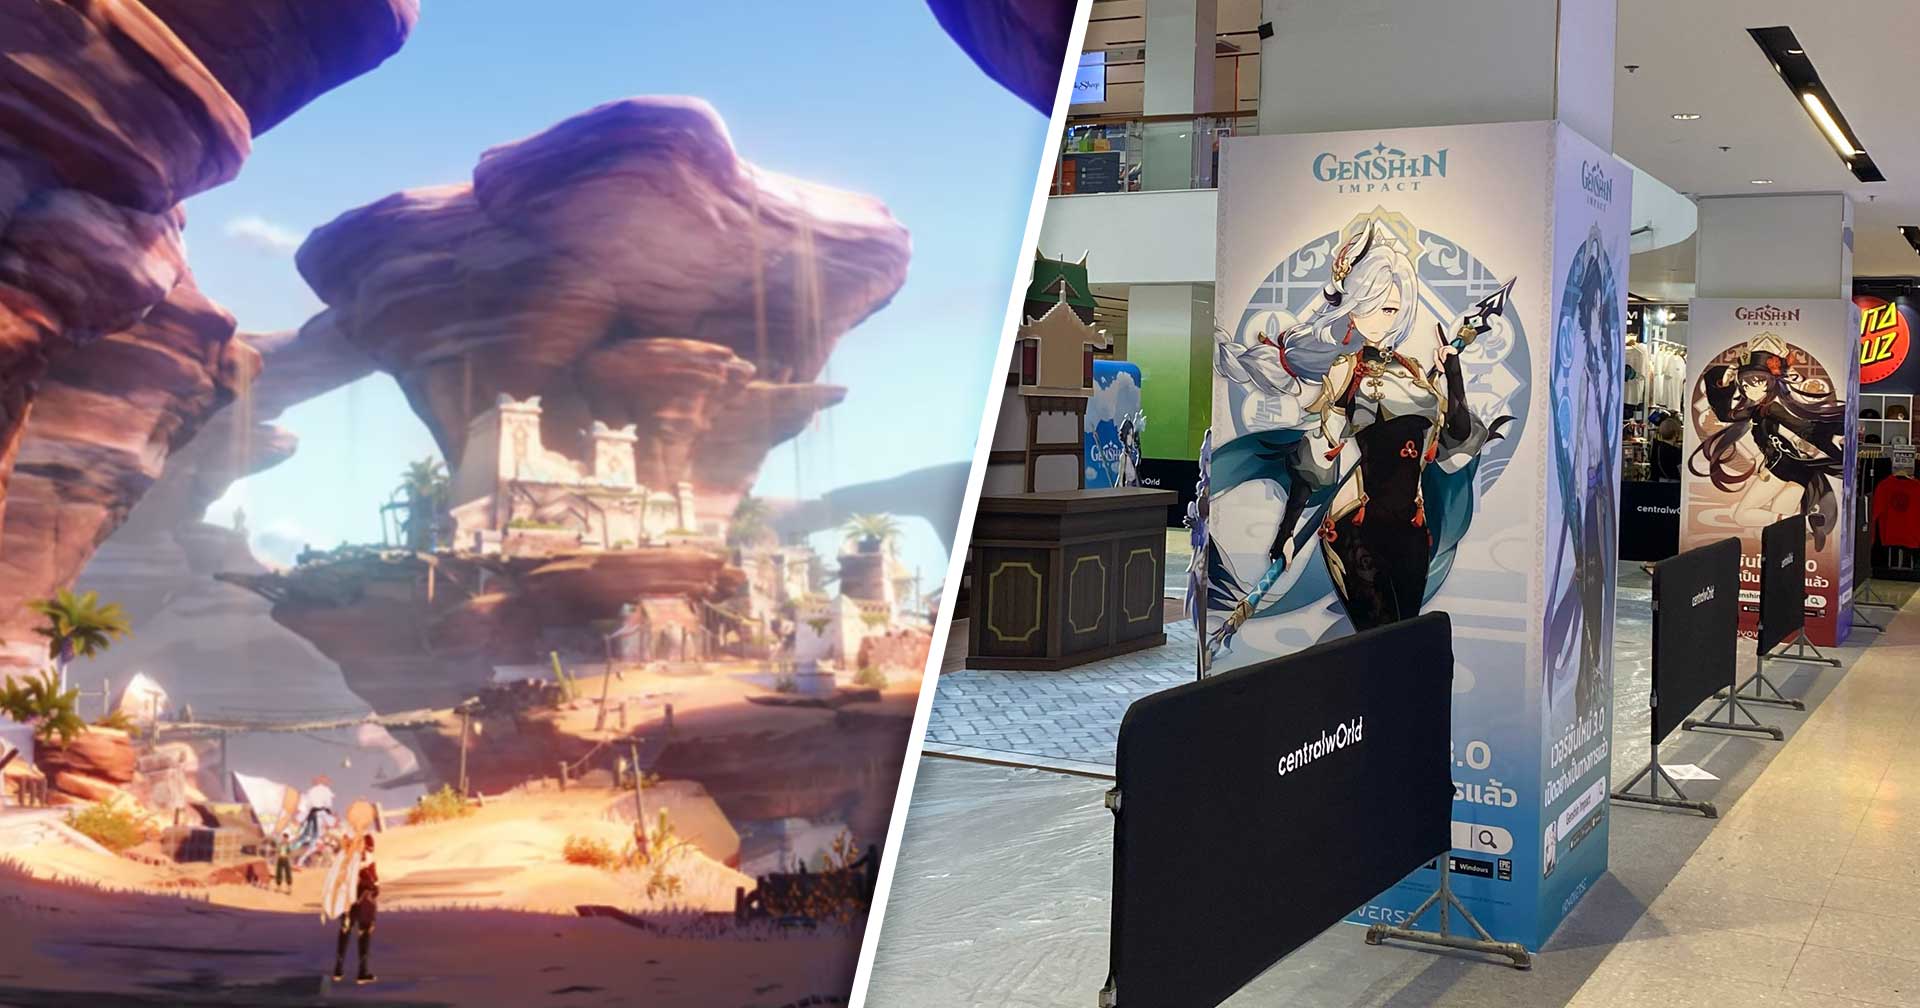 Genshin Impact เผยตัวอย่างใหม่ใน Gamescom 2022 และเตรียมจัดงานที่ Central World ในวันนี้